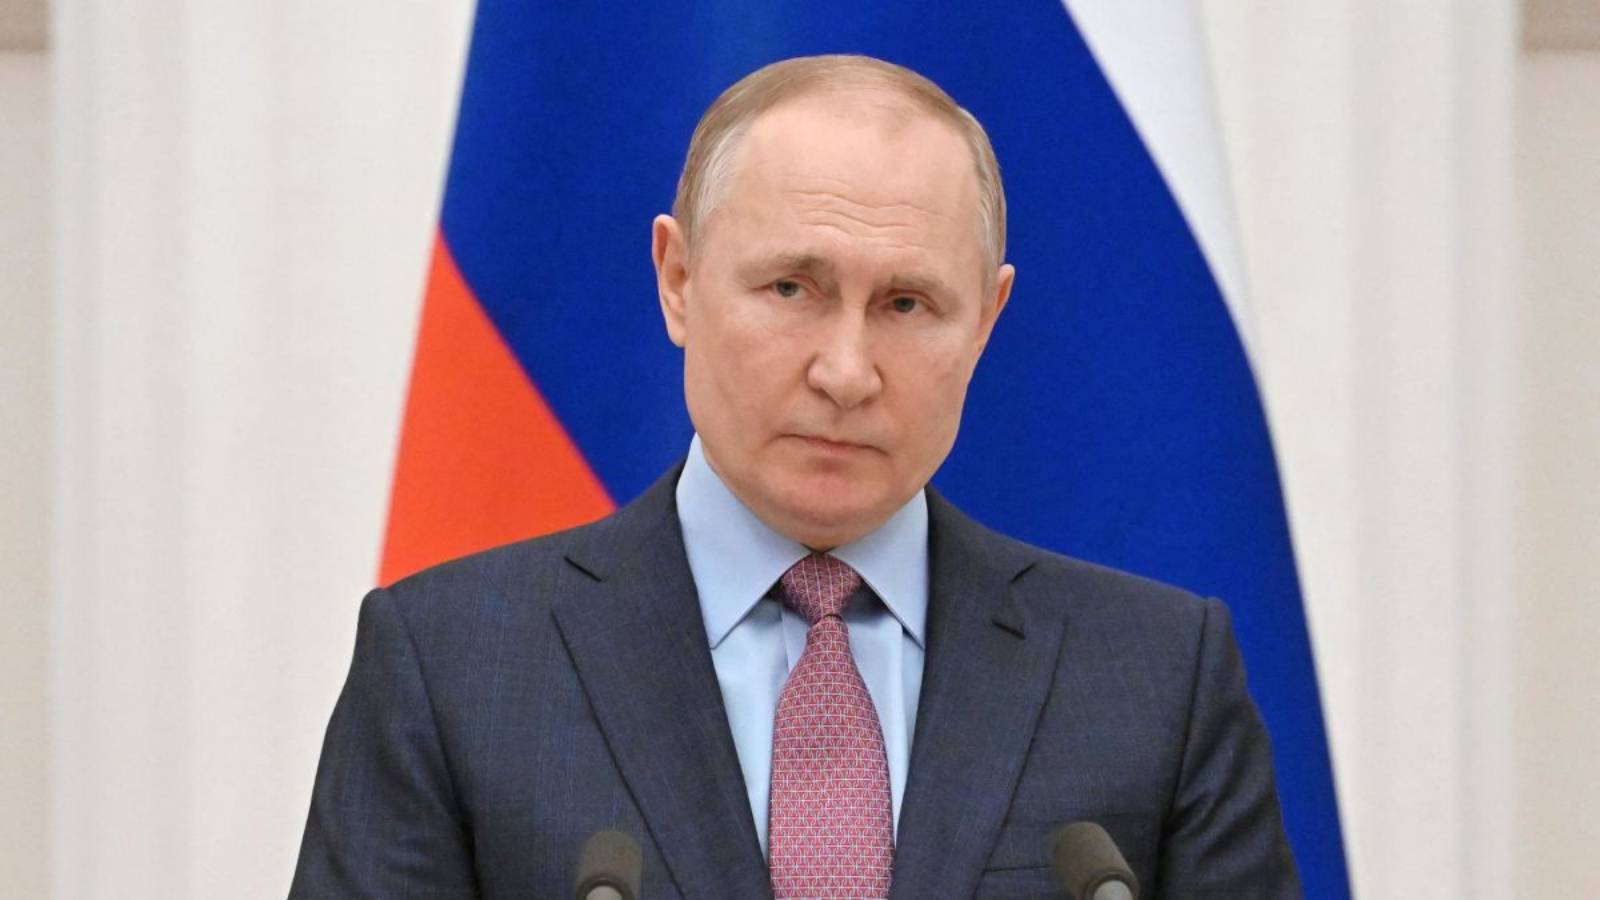 Vladimir Putin in Centrul unor Discutii Aprinse intre Liderii UE